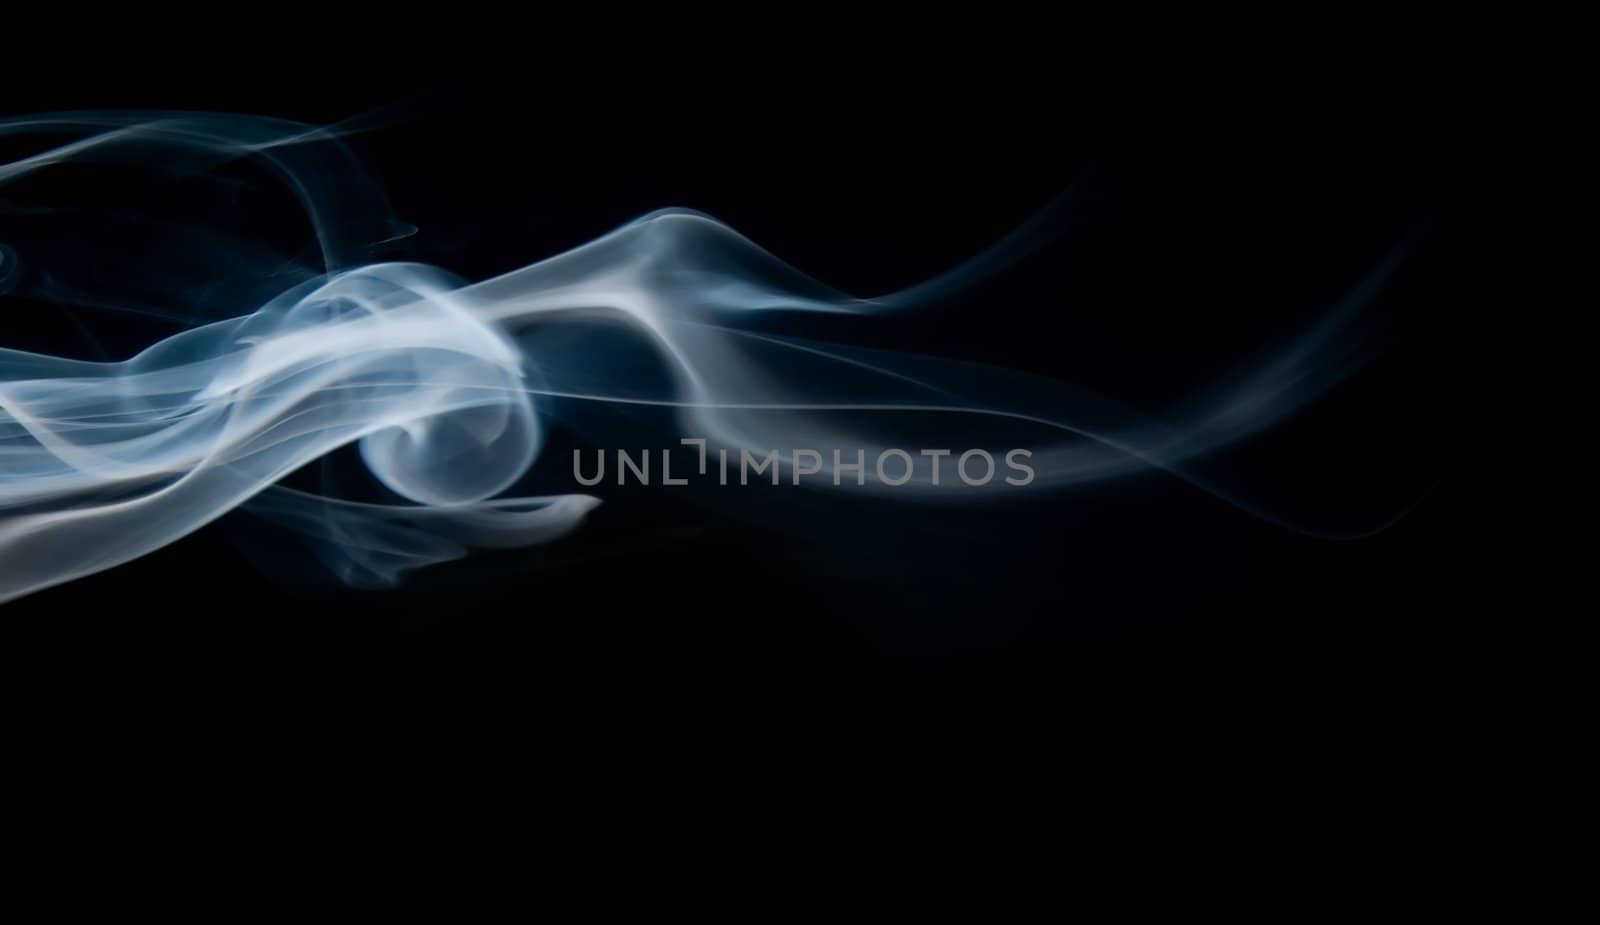 Smoke by henrischmit